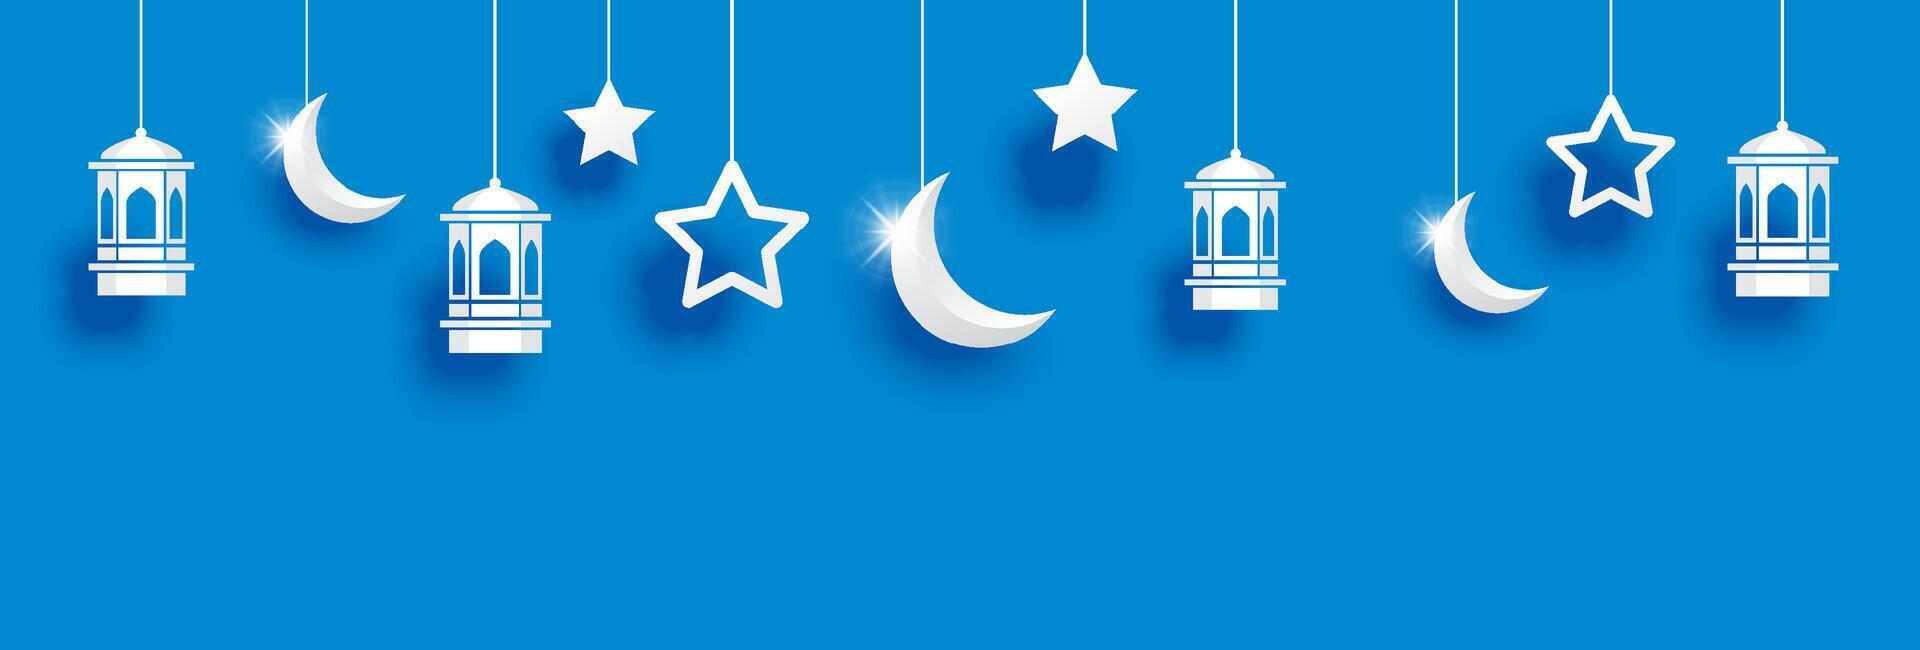 Ramadan kareem saluto carta sfondo. eid mubarak carta arte bandiera illustrazione design. vettore